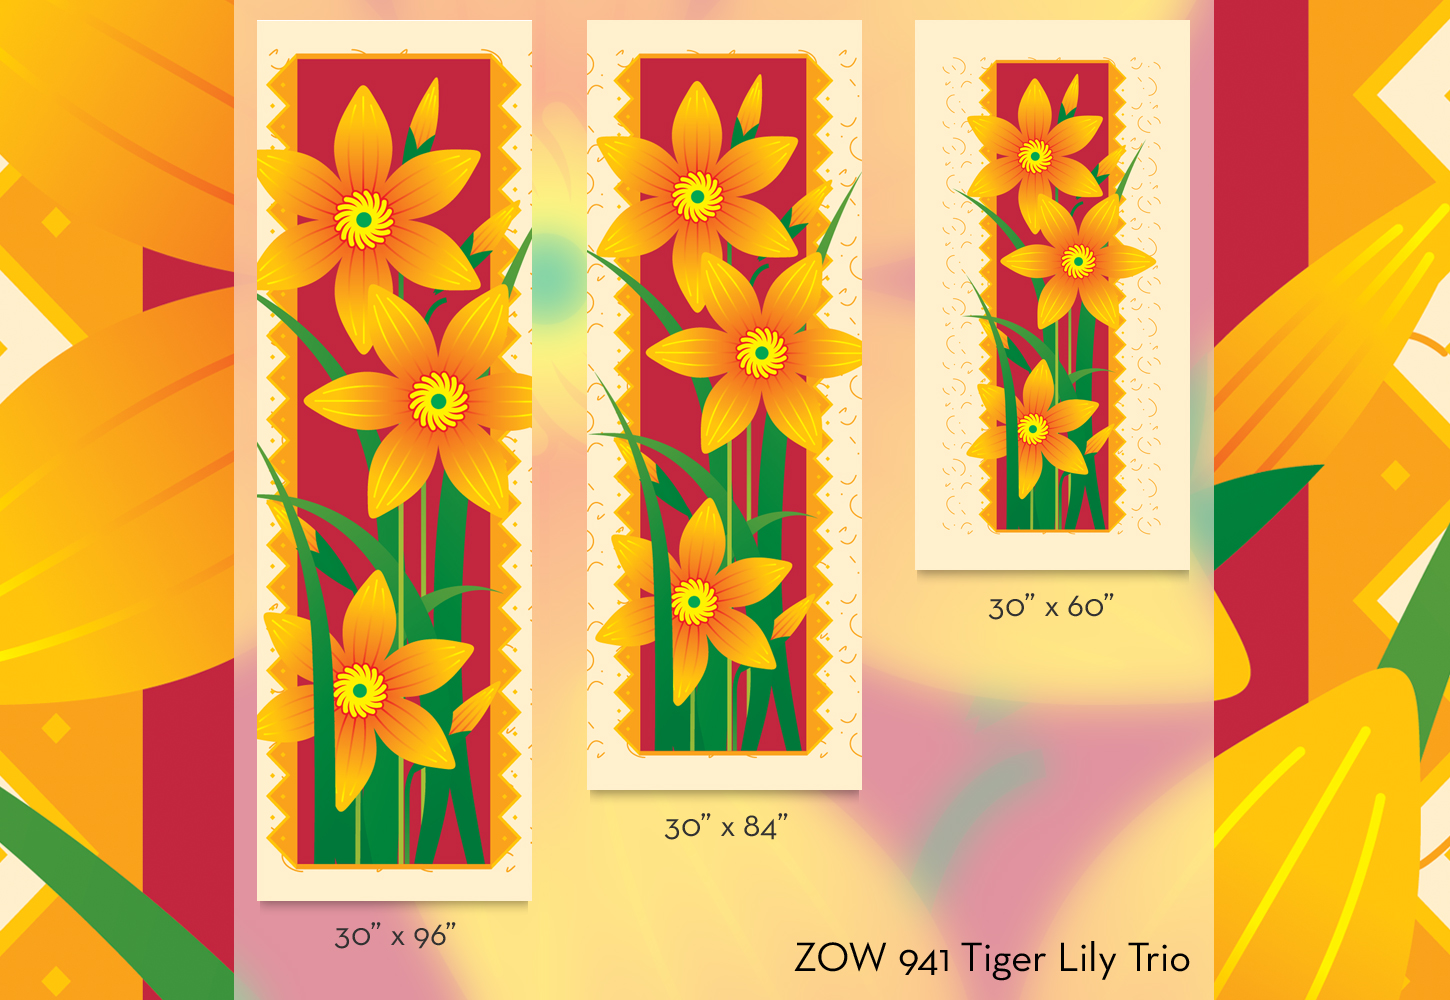 ZOW 941 Tiger Lily Trio